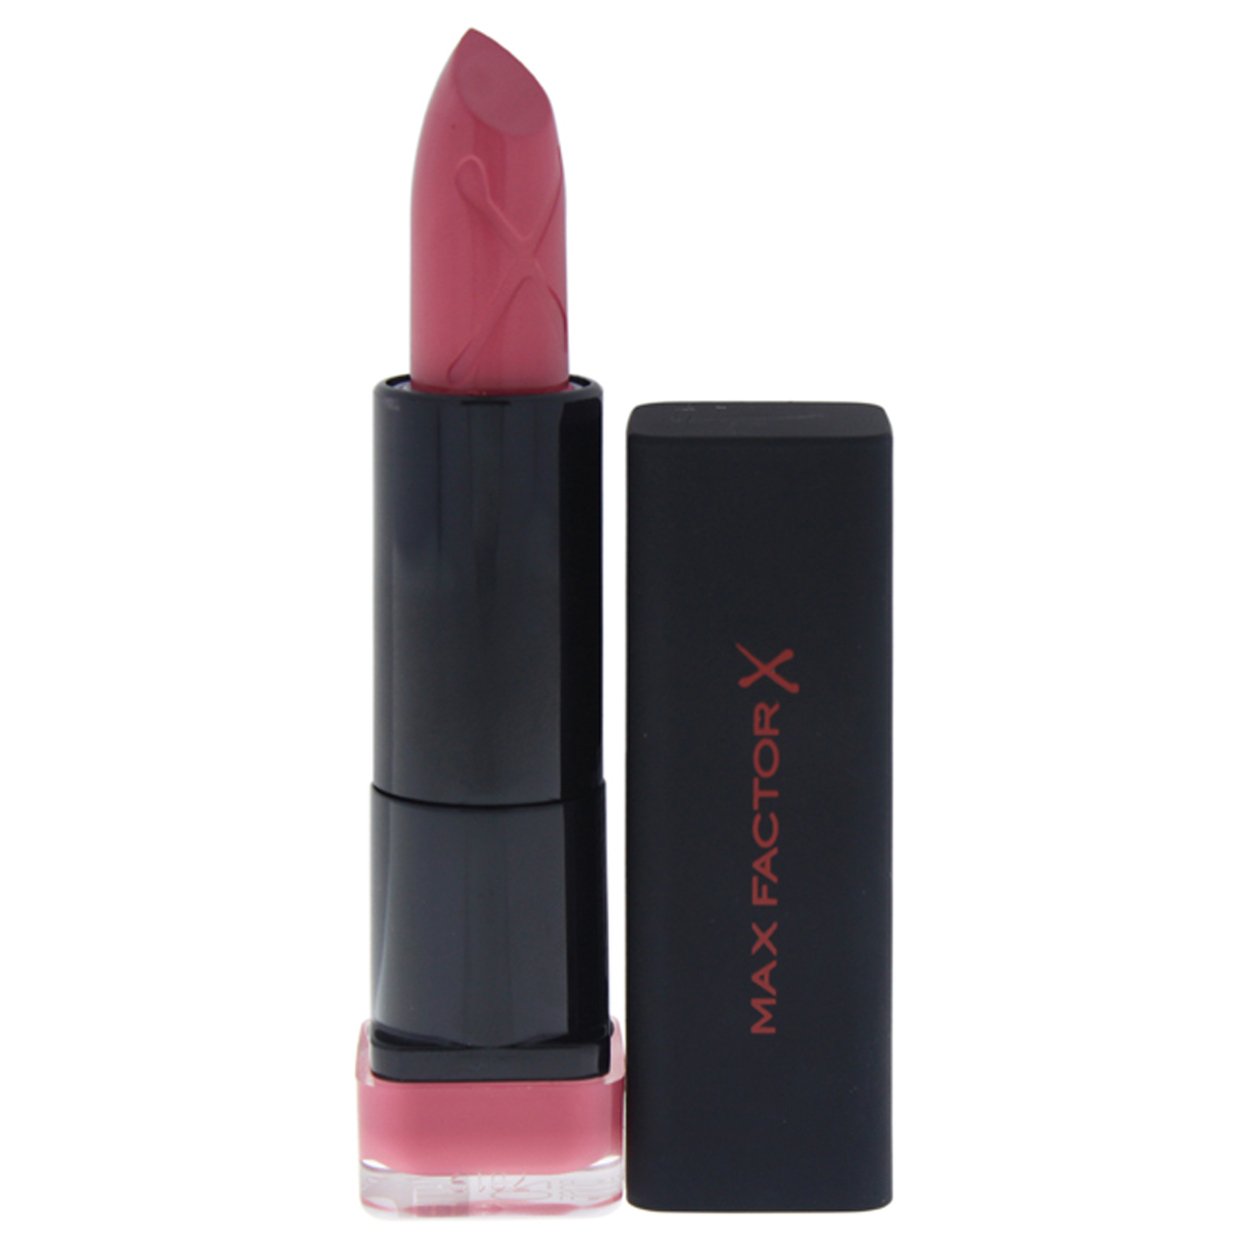 Max Factor Lipstick Matte - 20 Rose 0.14 Oz